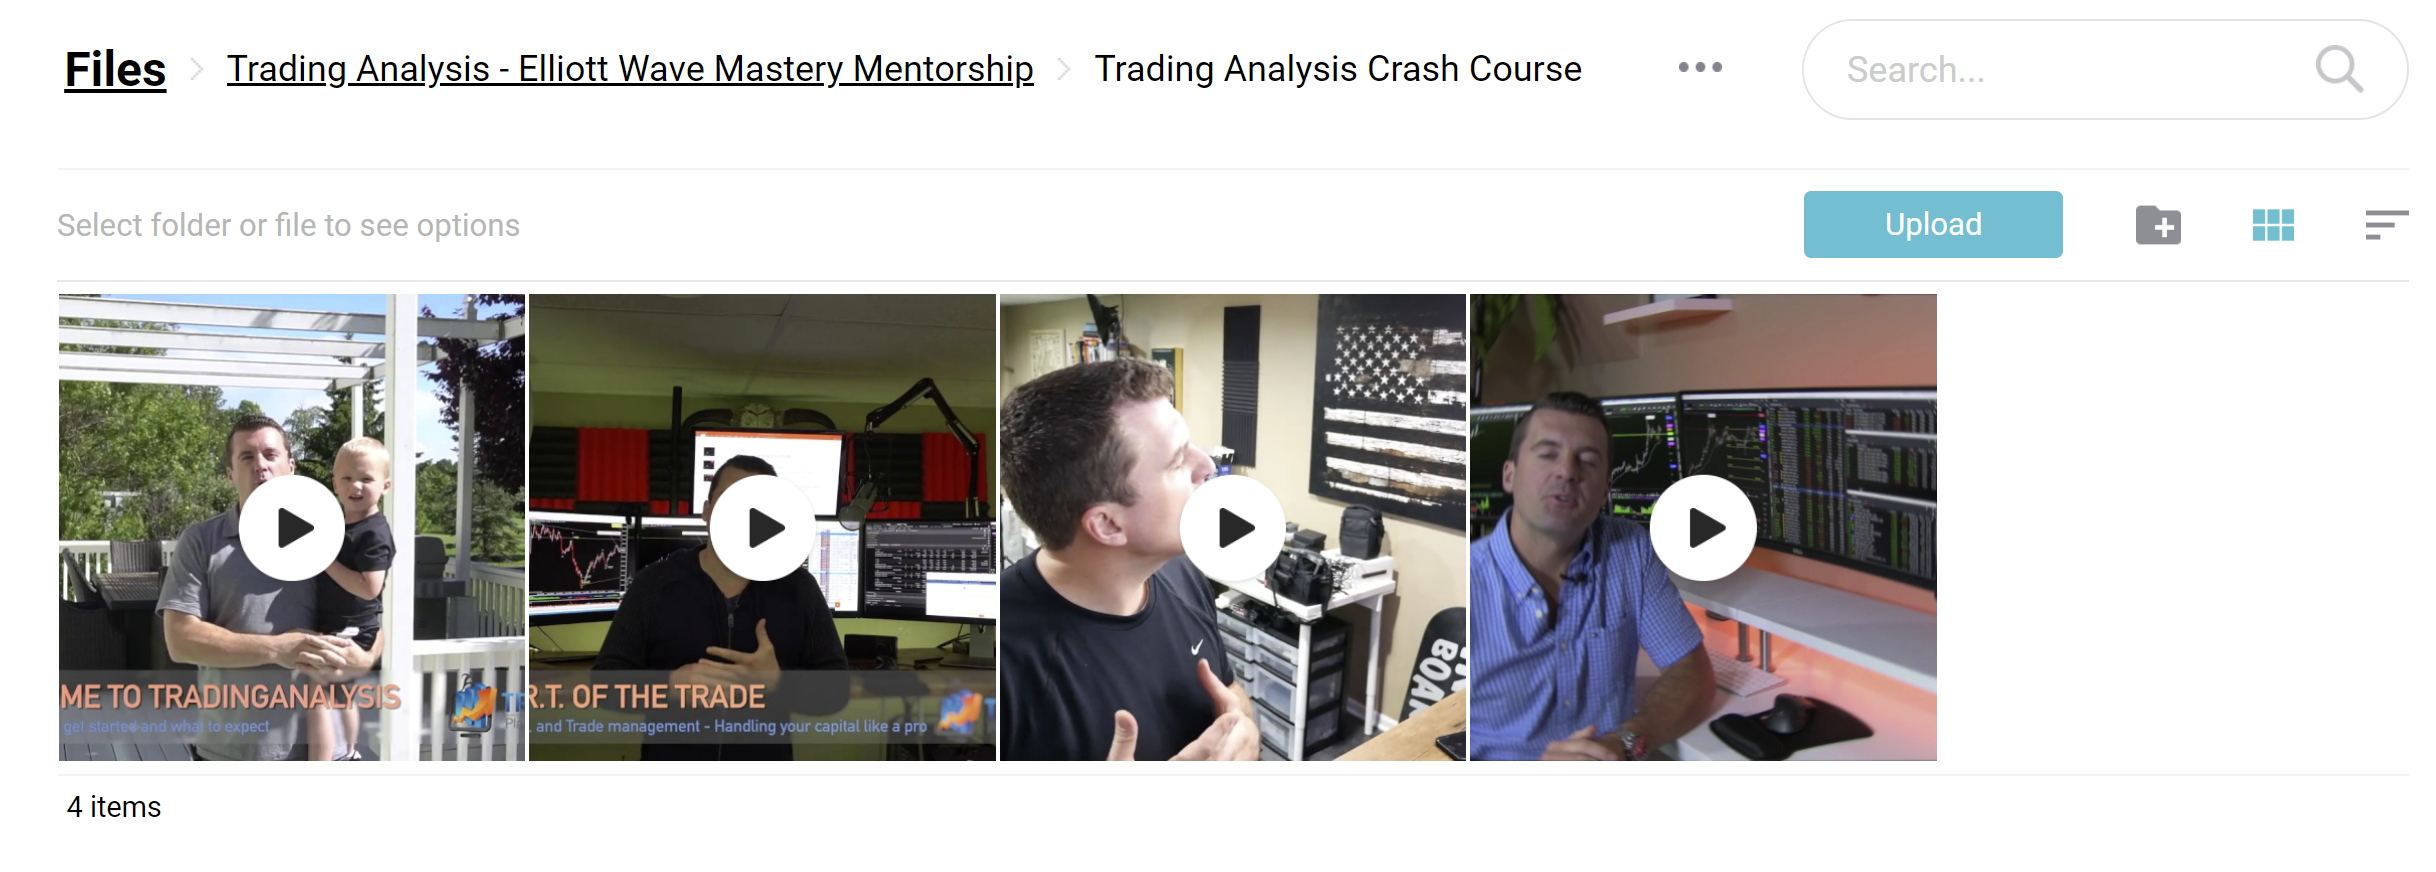 Trading Analysis Crash Course